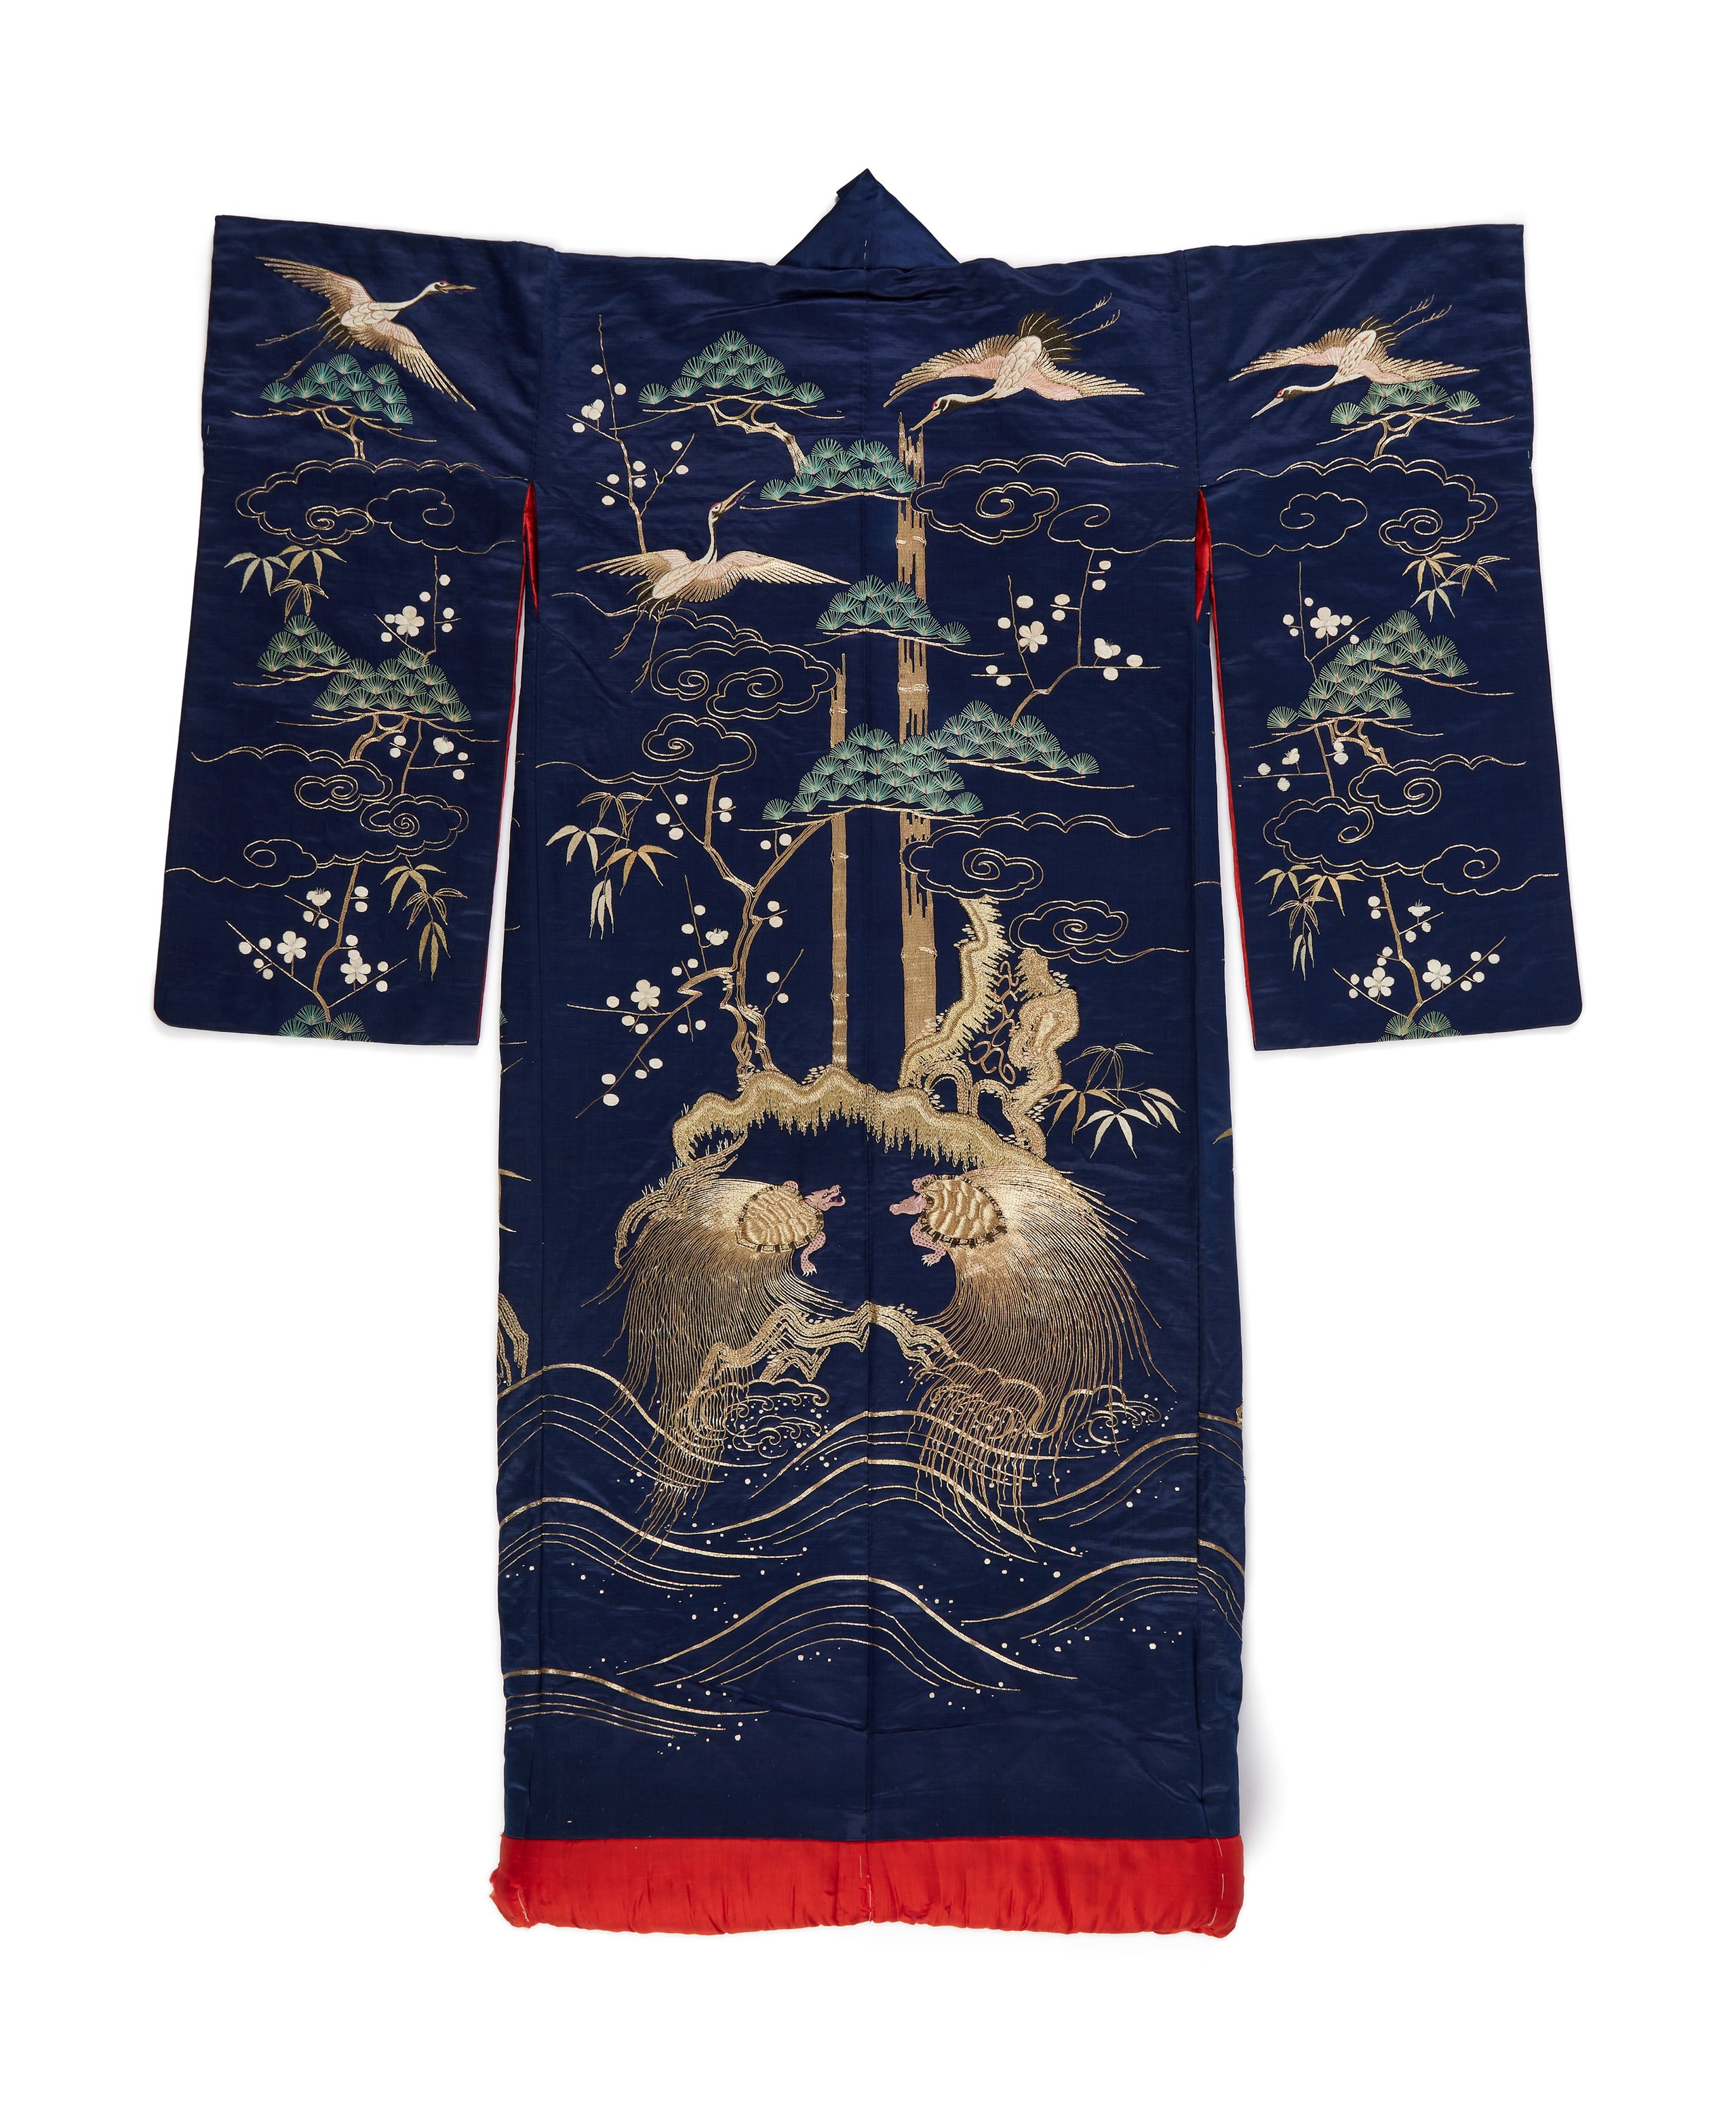 Formal kimono from Japan